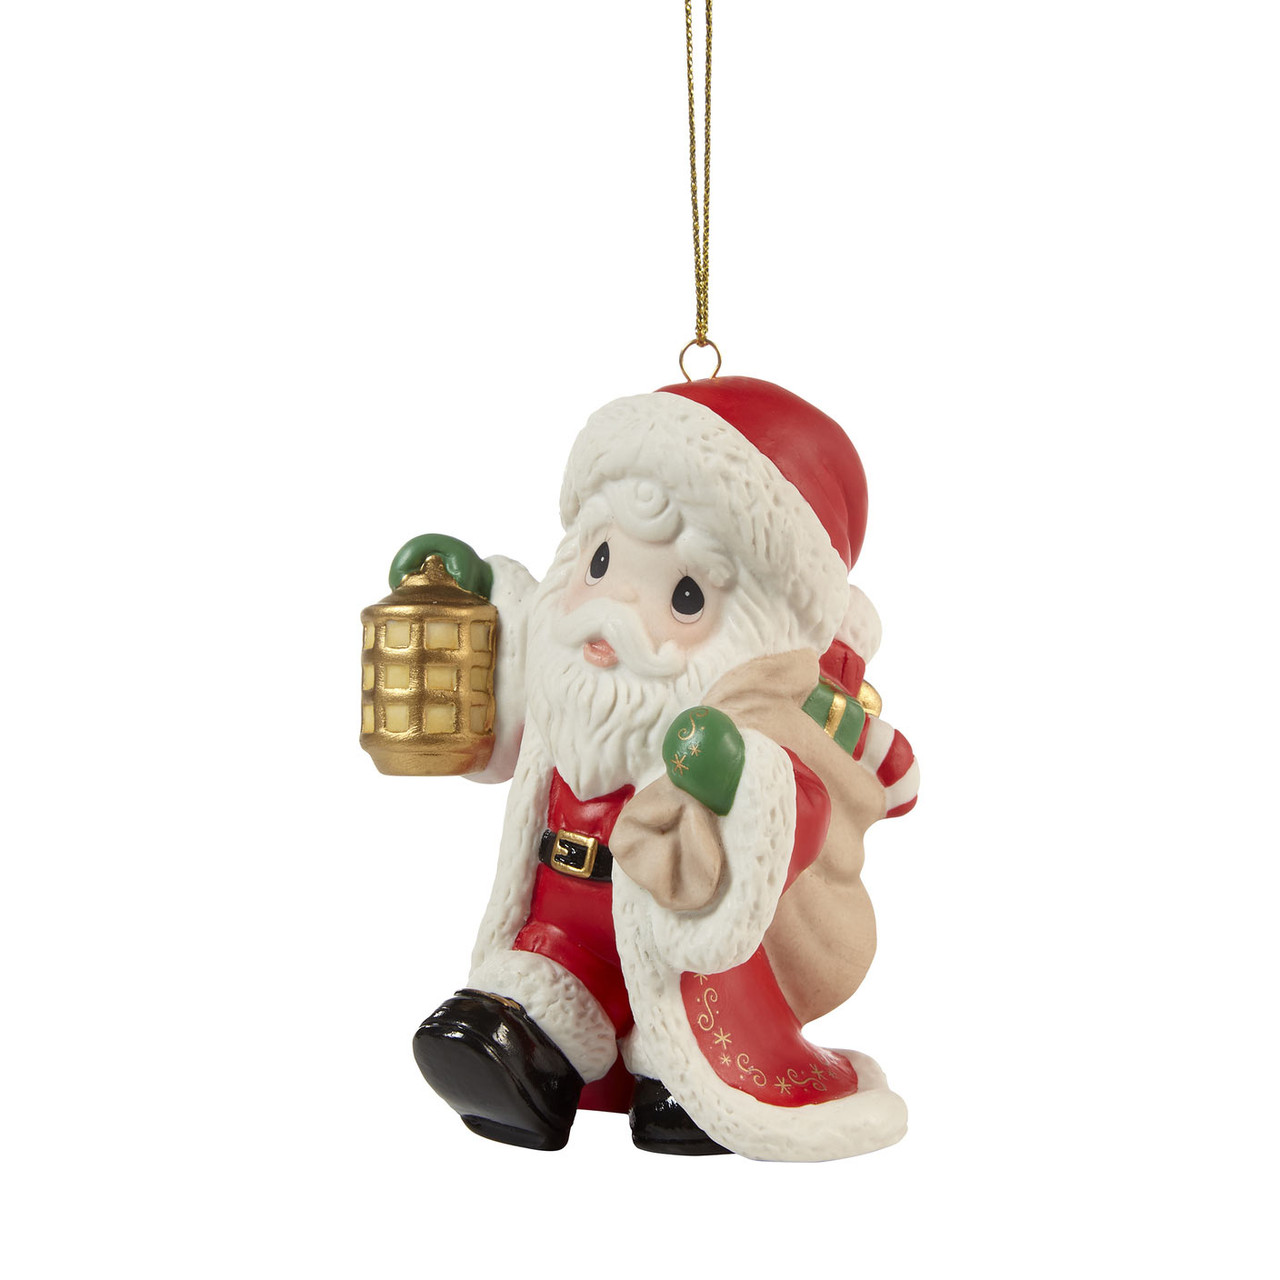 Lenox Snowman Globe Ornament, Holiday Ornaments